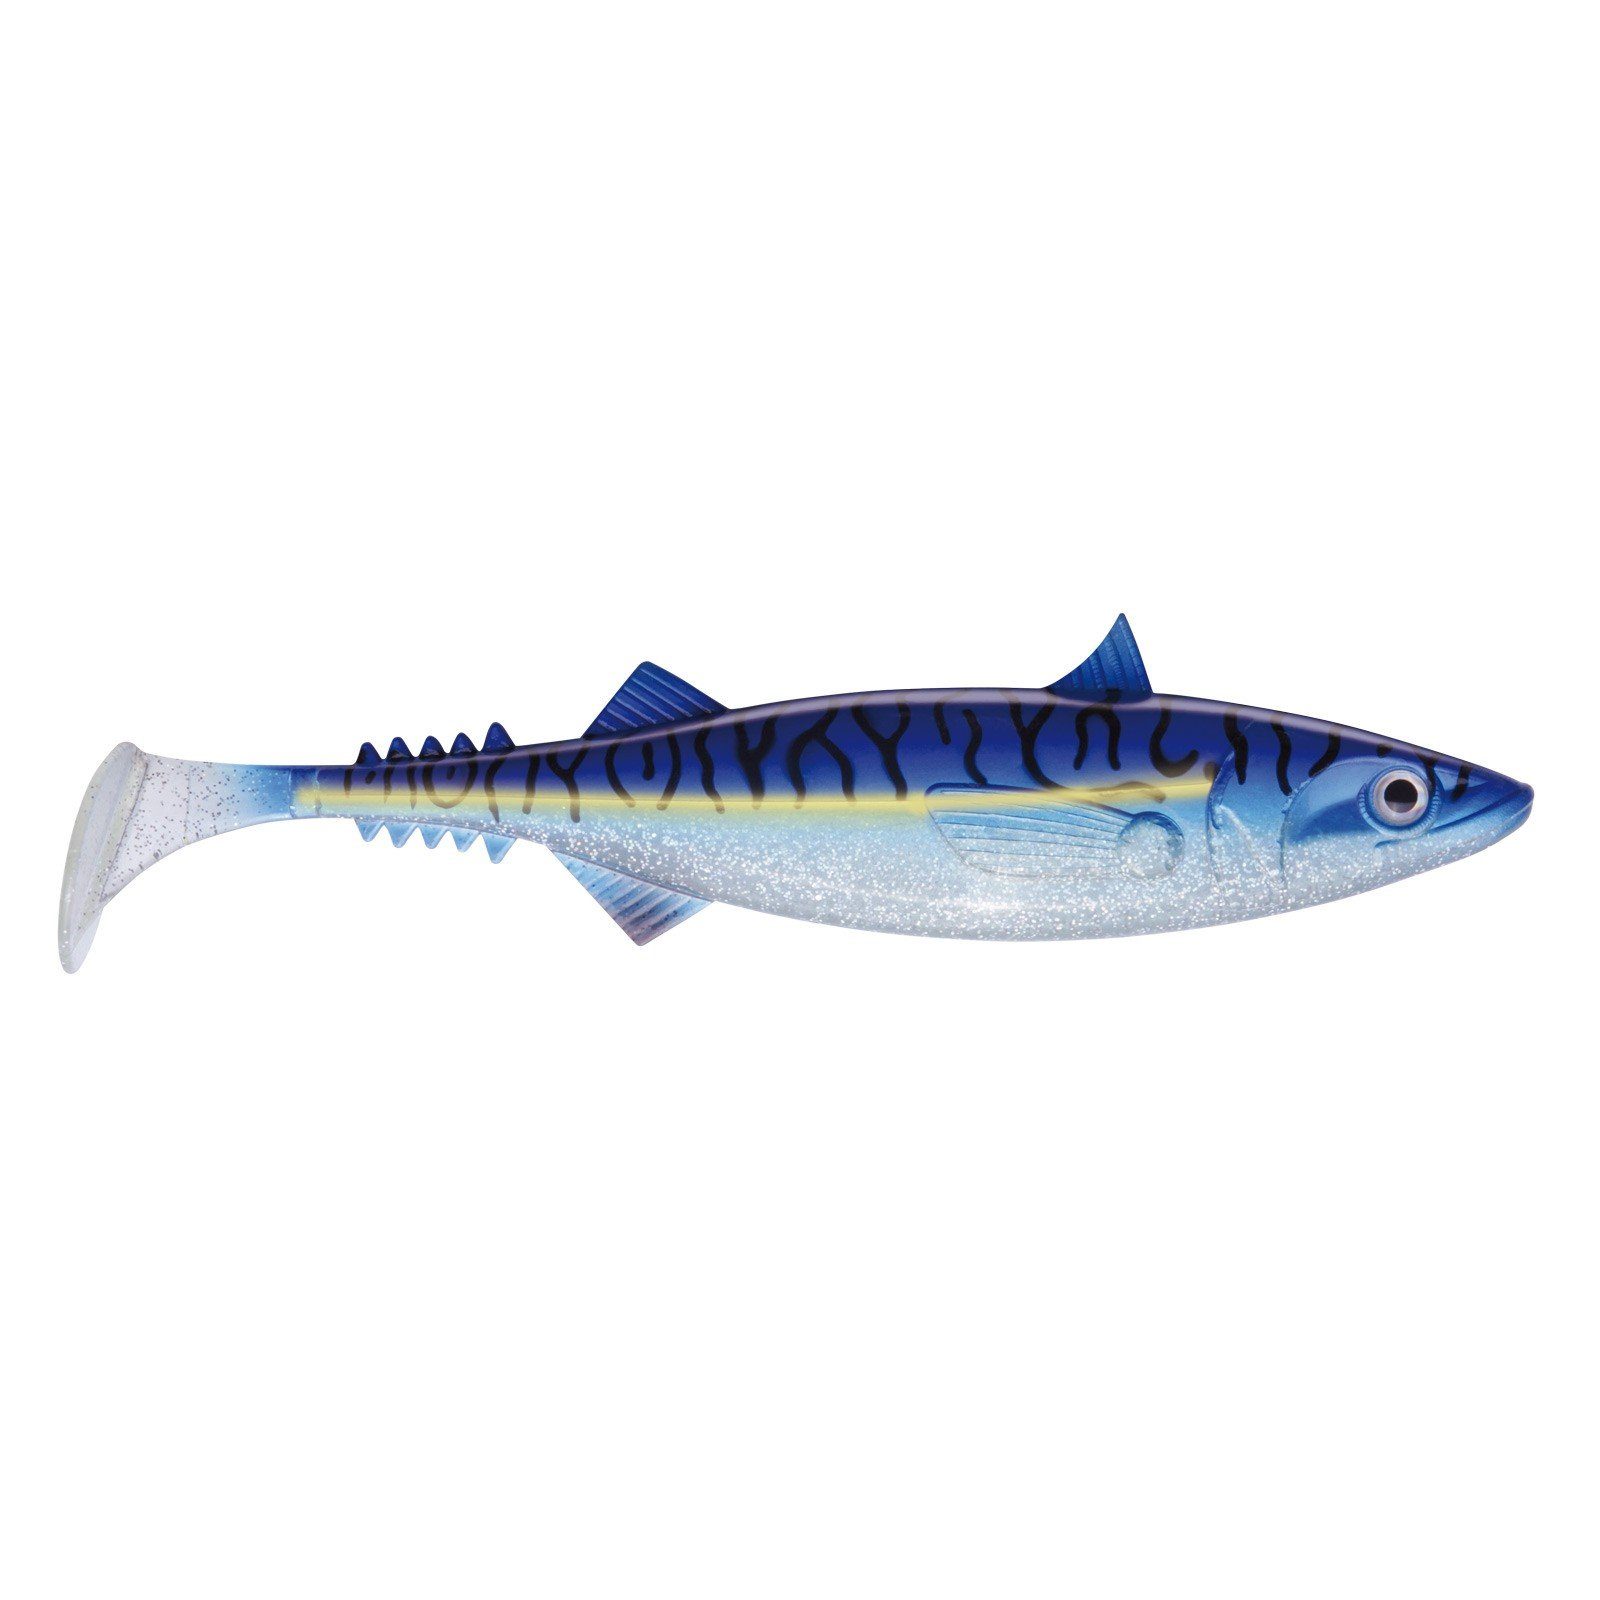 Jackson Sea Kunstköder, Blue The Gummifisch Meer Mackerel 18cm Mackerel Sea Jackson